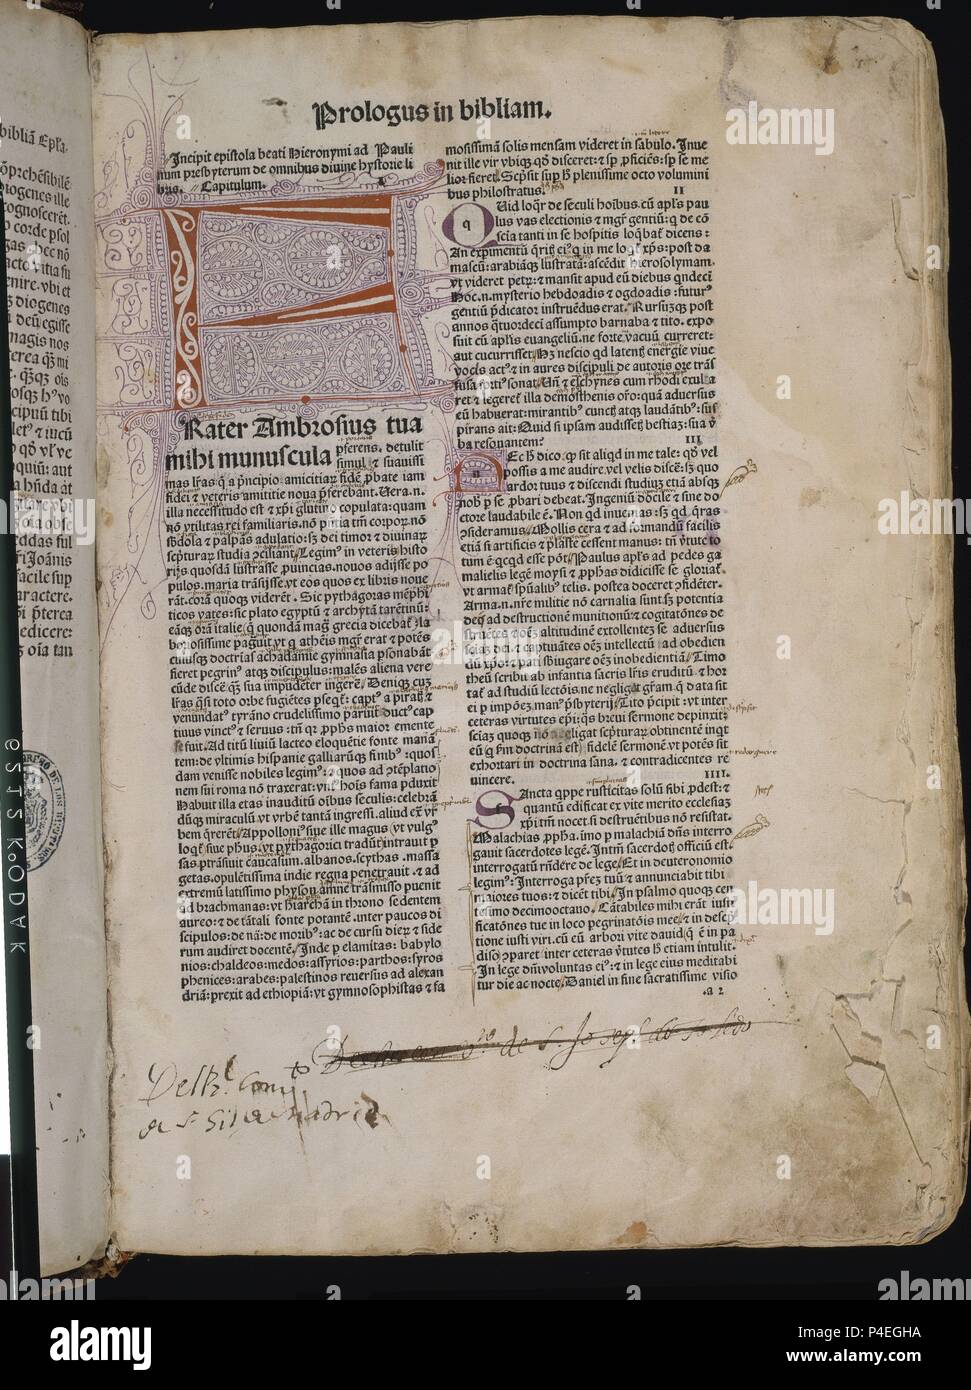 BIBLIA LATINA - INCUNABLE - VENECIA, 1483. Author: HERBORT JOHANNES. Location: CONGRESO DE LOS DIPUTADOS-BIBLIOTECA, MADRID, SPAIN. Stock Photo